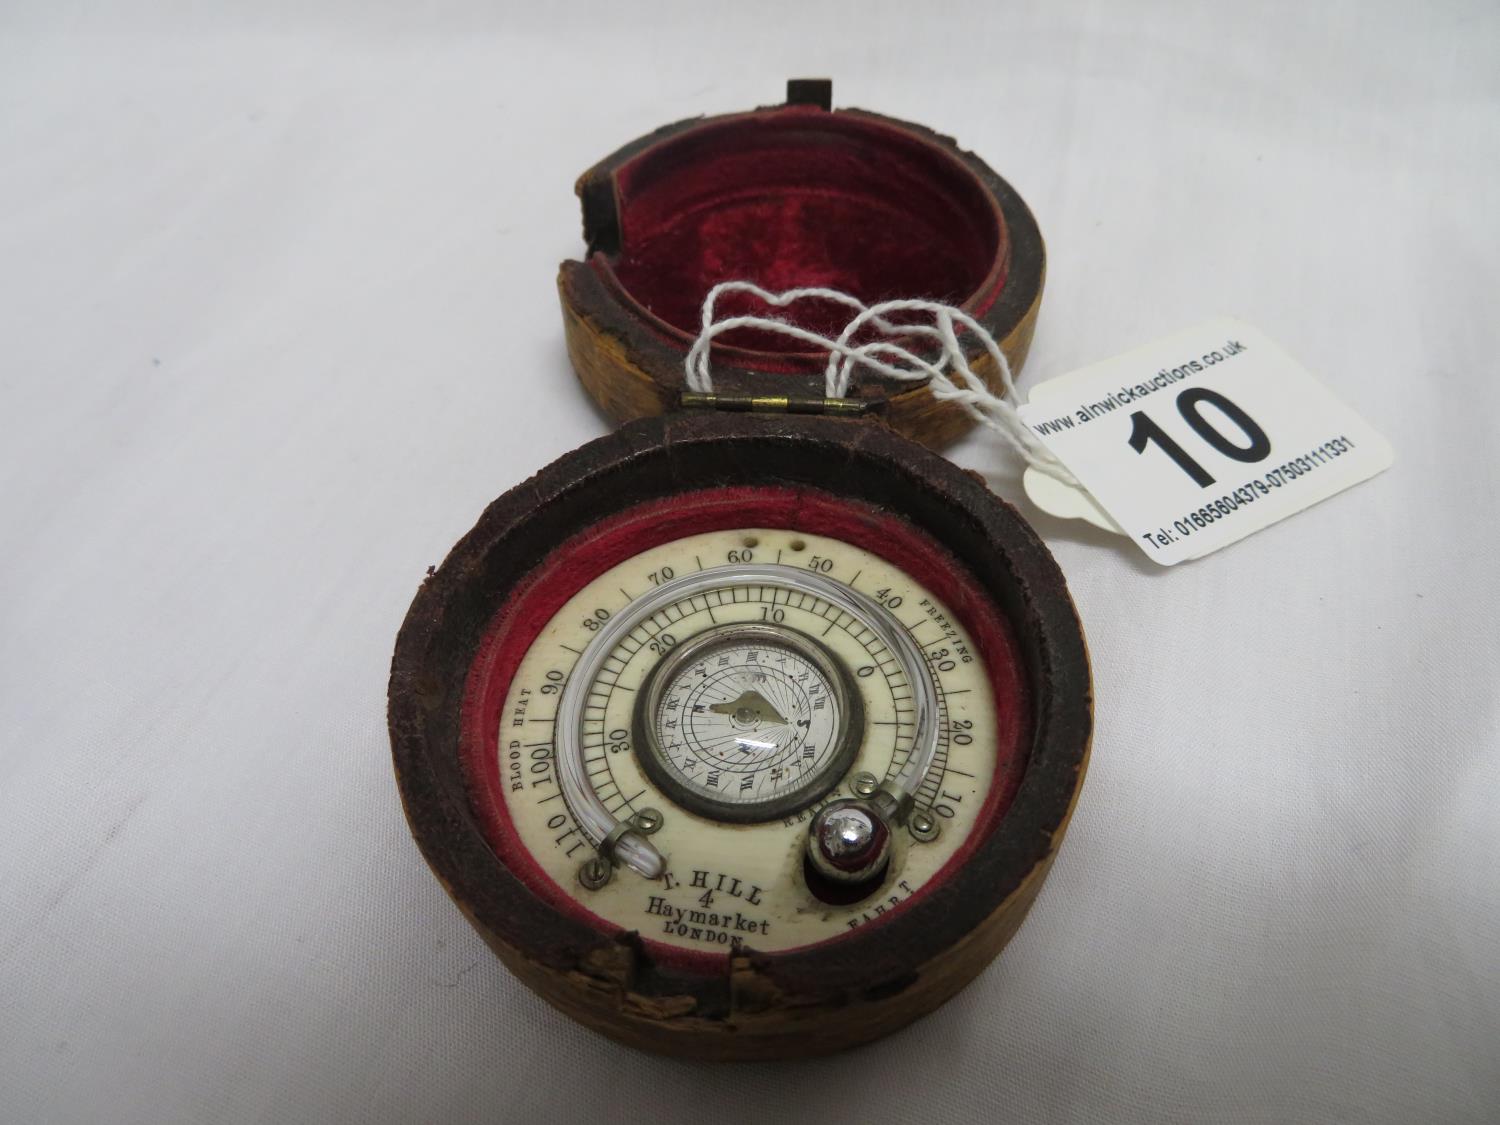 Pocket barometer with compass - mercury tube perfect - by T Hill, Haymarket, London. - Bild 2 aus 4